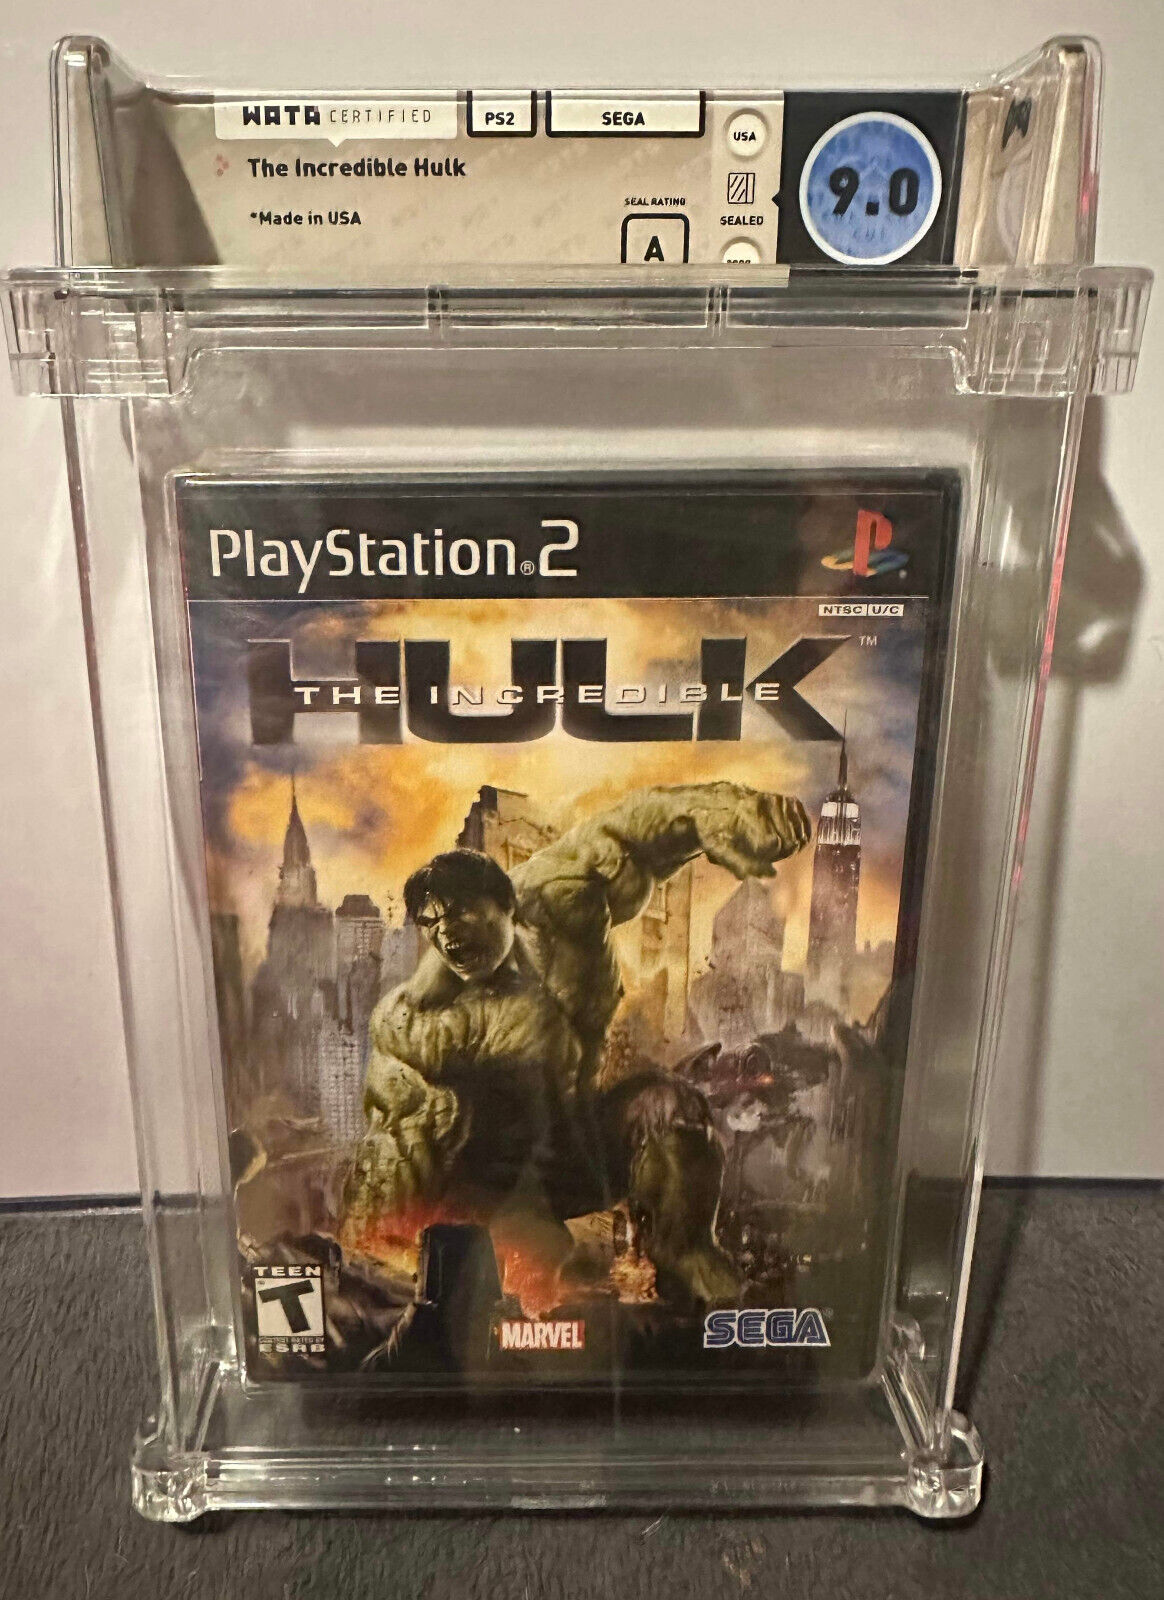 The Incredible Hulk - Playstation 2 WATA 9.0 Certified Game A